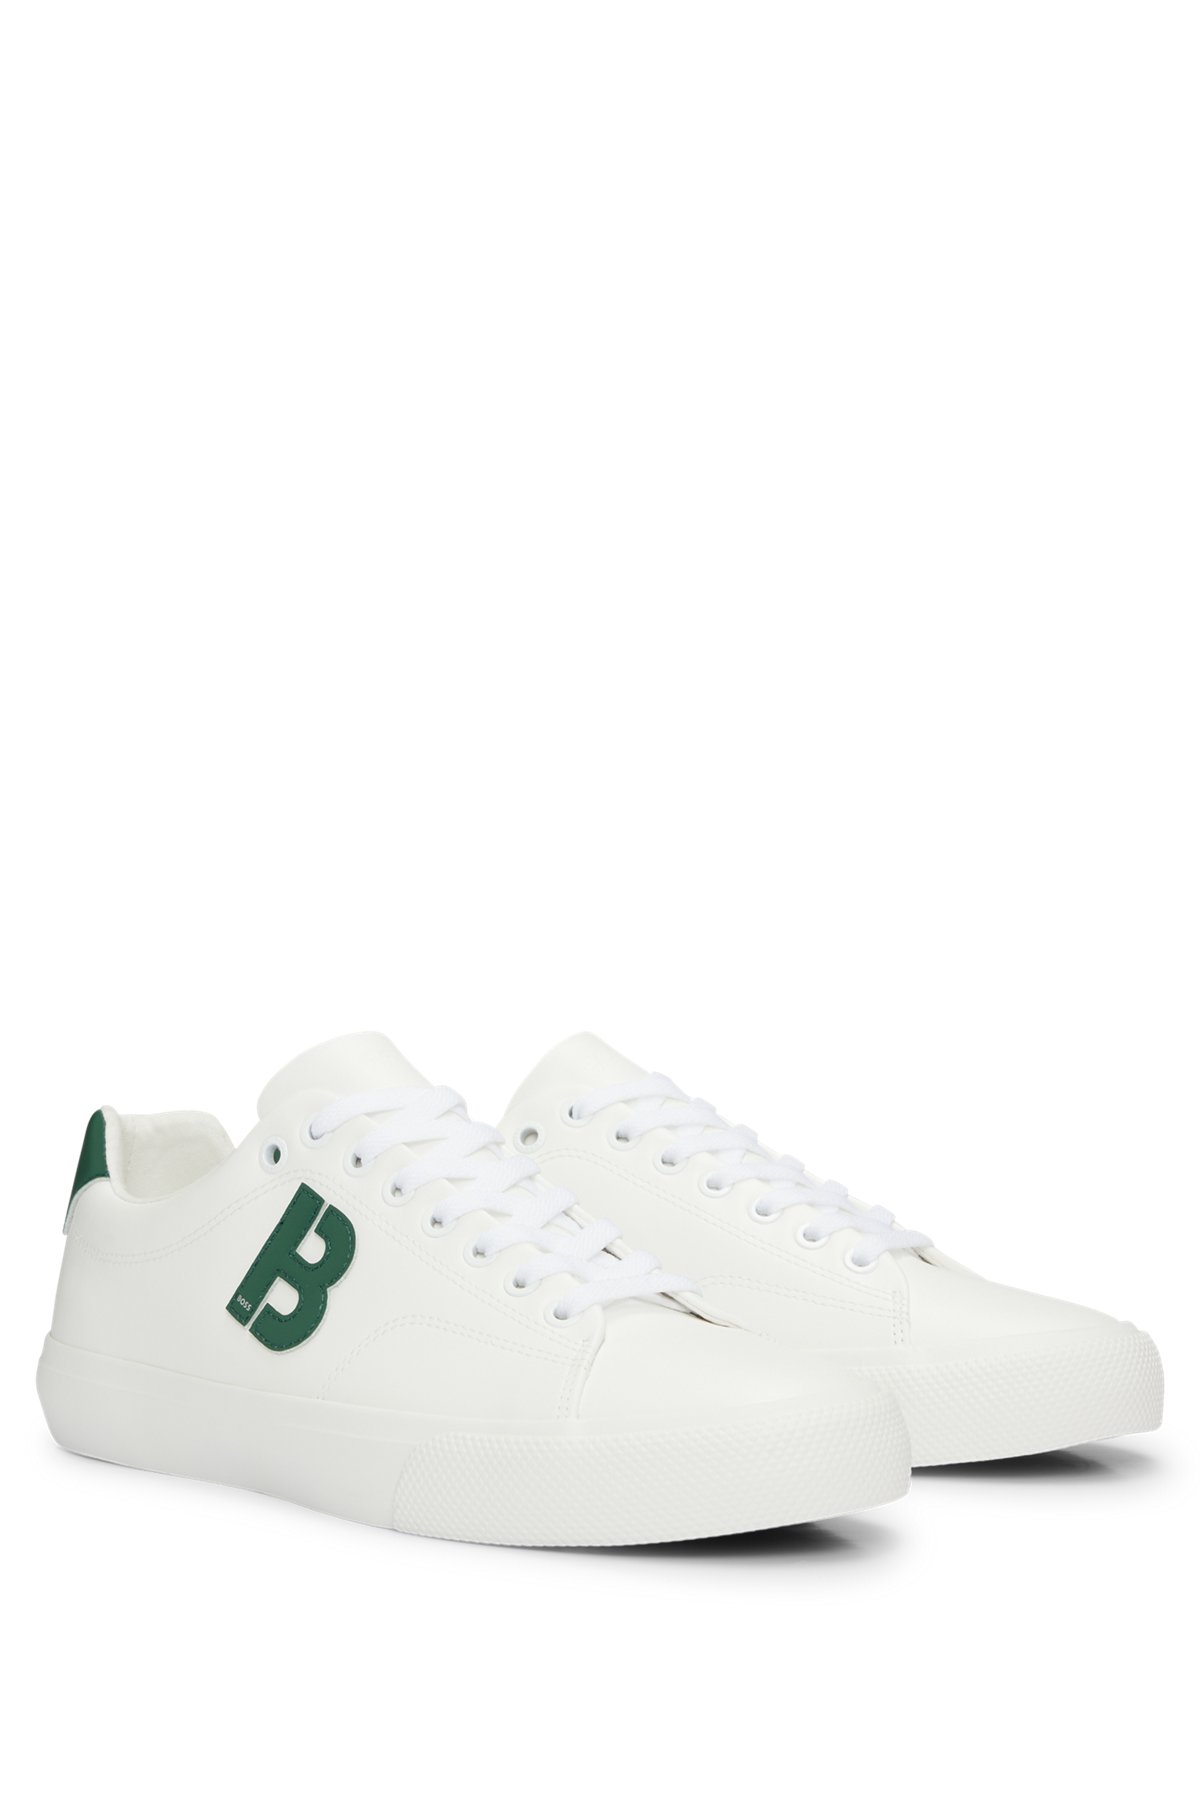 Lowtop Sneakers mit kontrastfarbenem B-Detail, Weiß